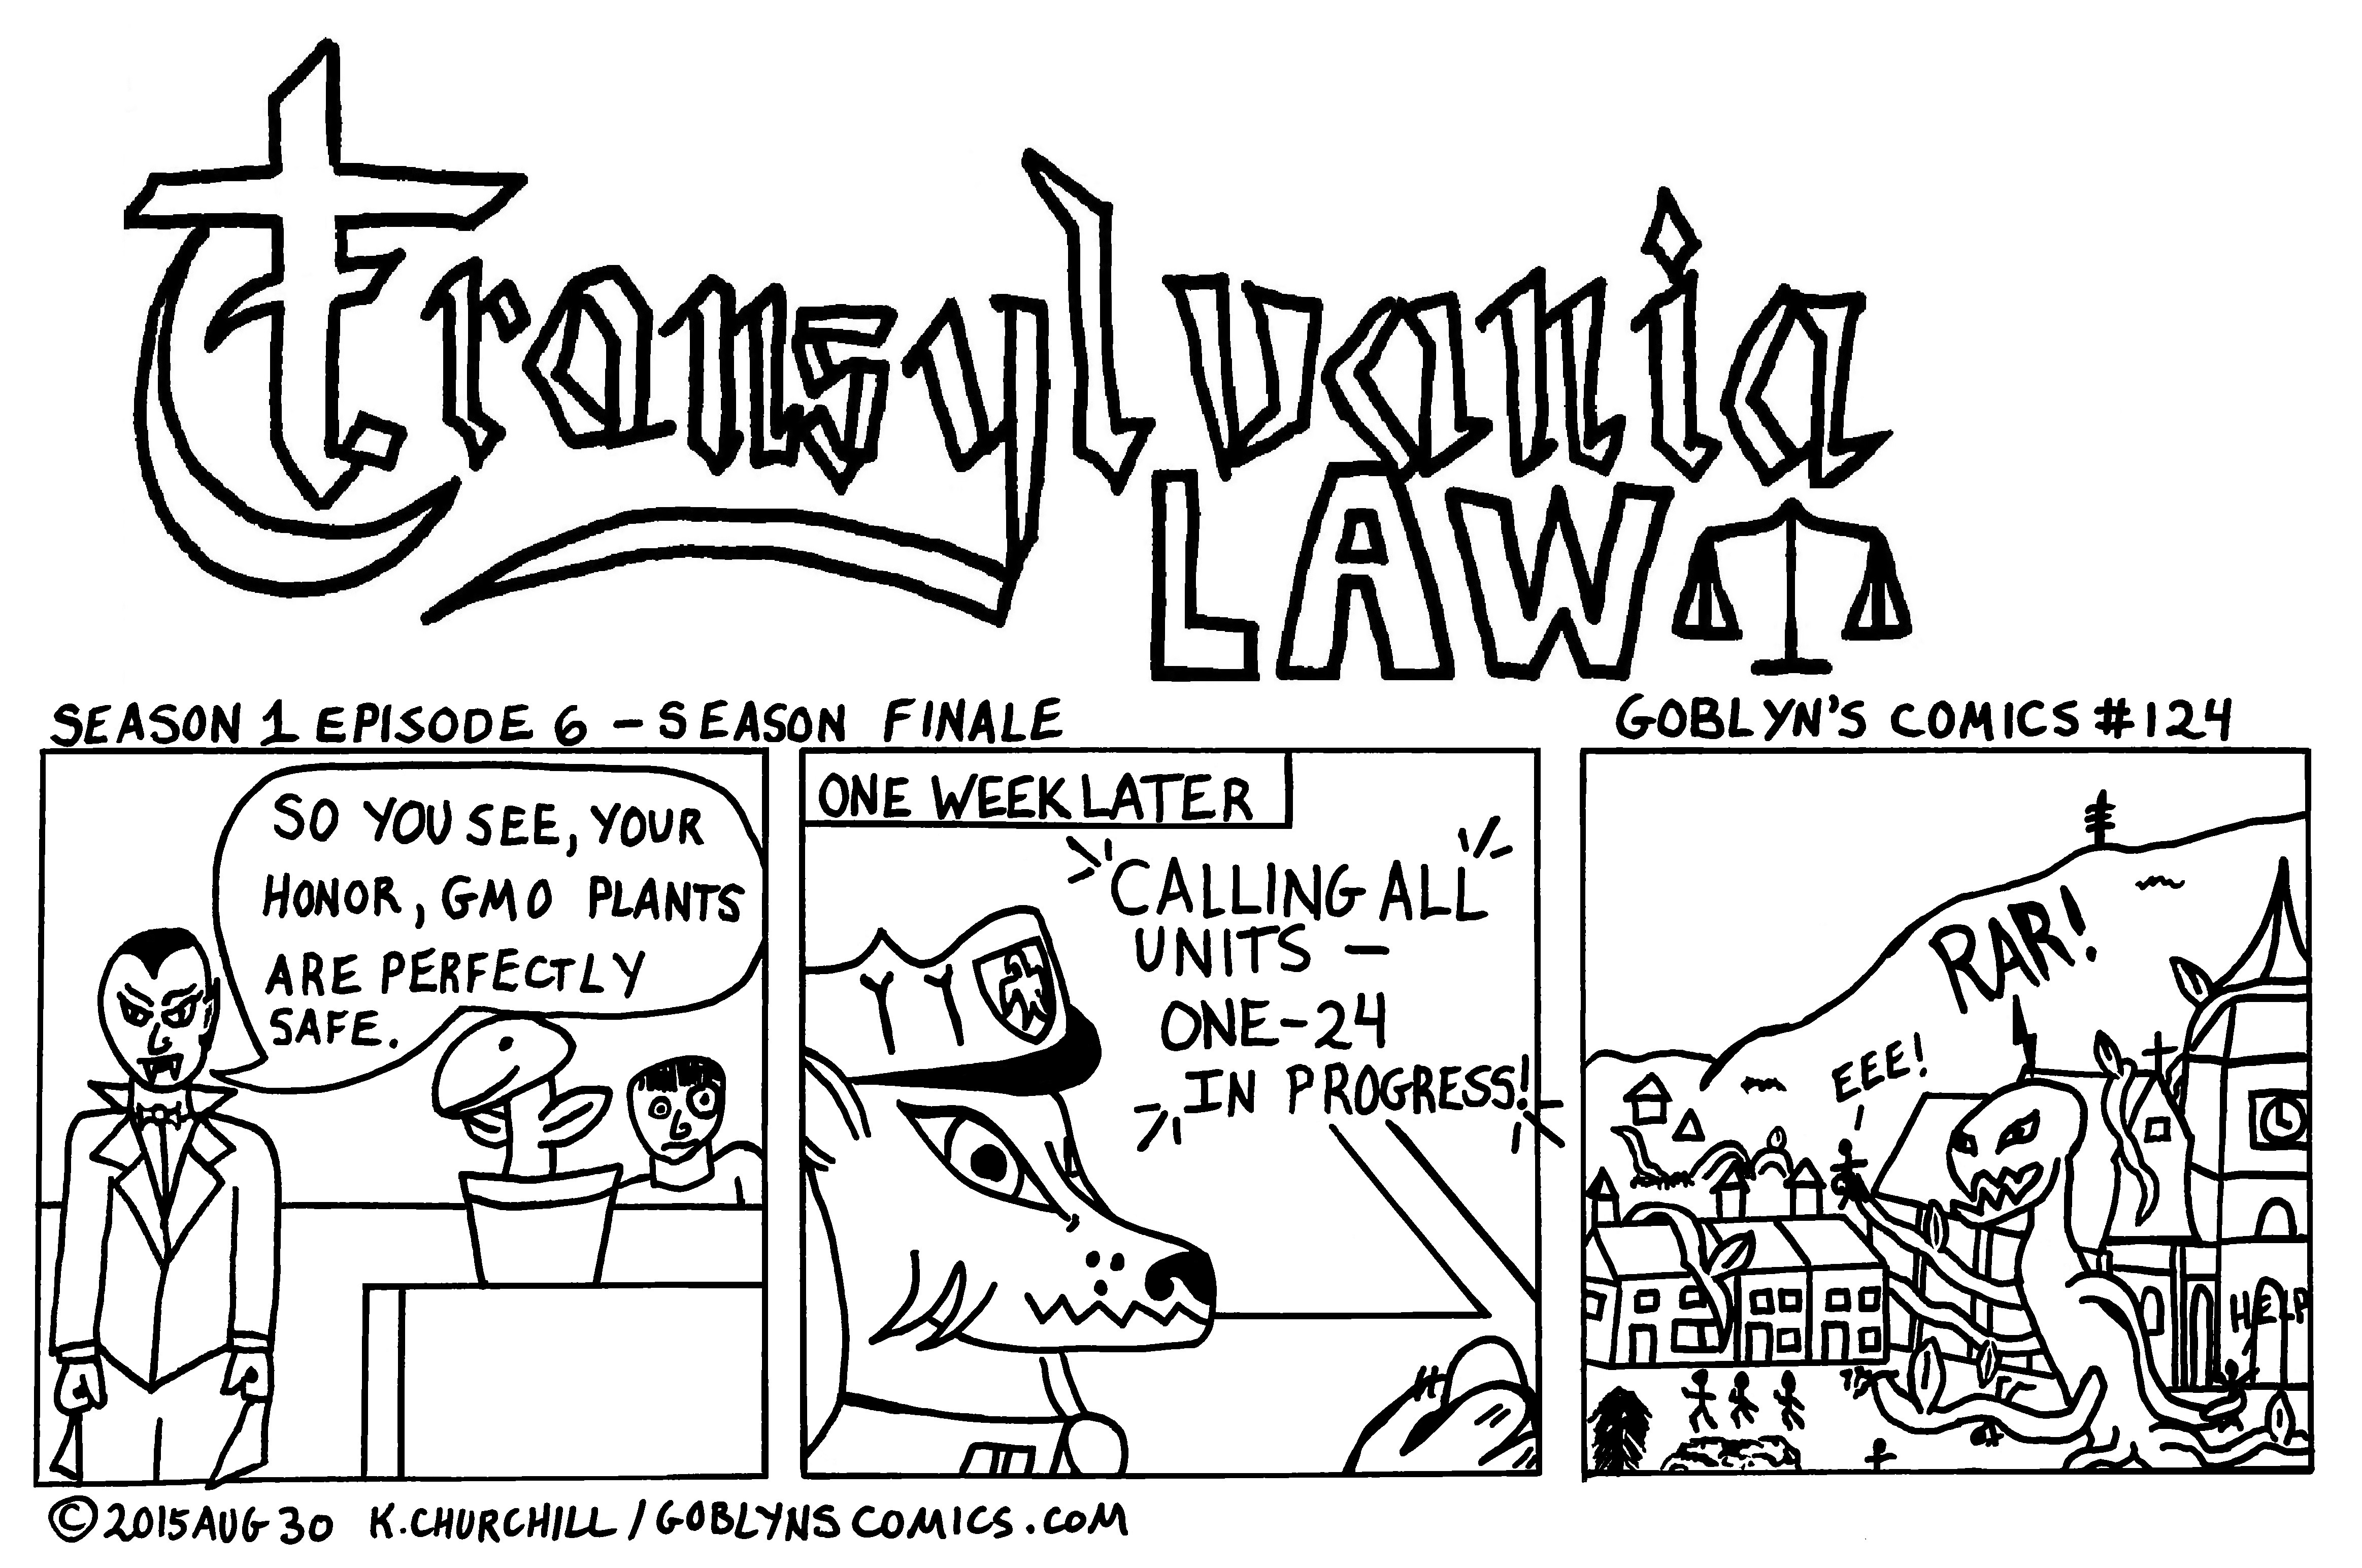 Transylvania Law - Season Finale!